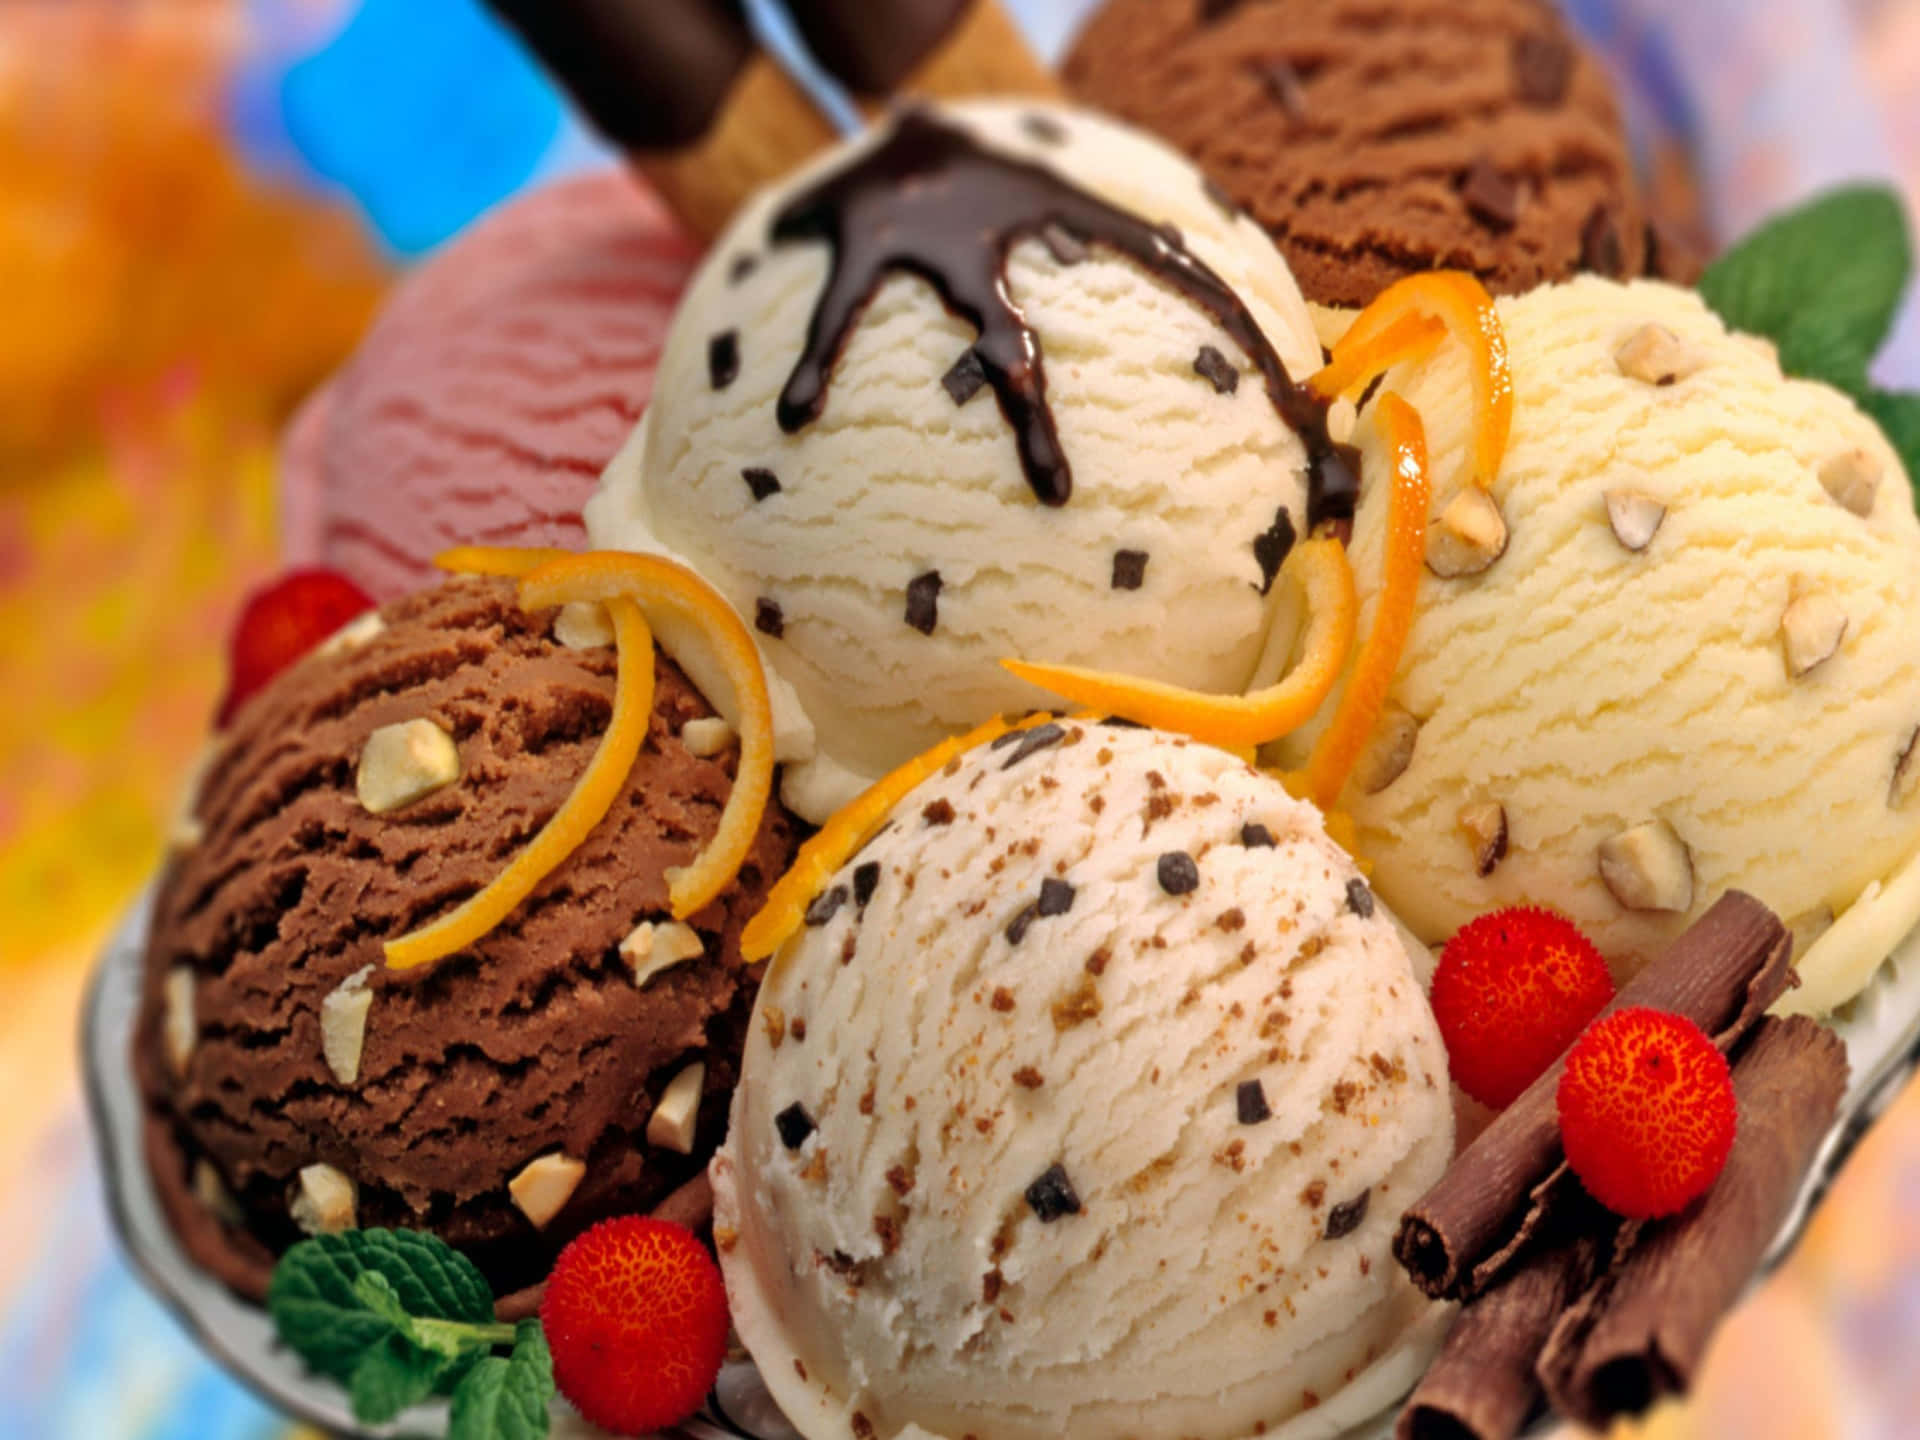 Enjoy delicious, hand-crafted ice cream treats